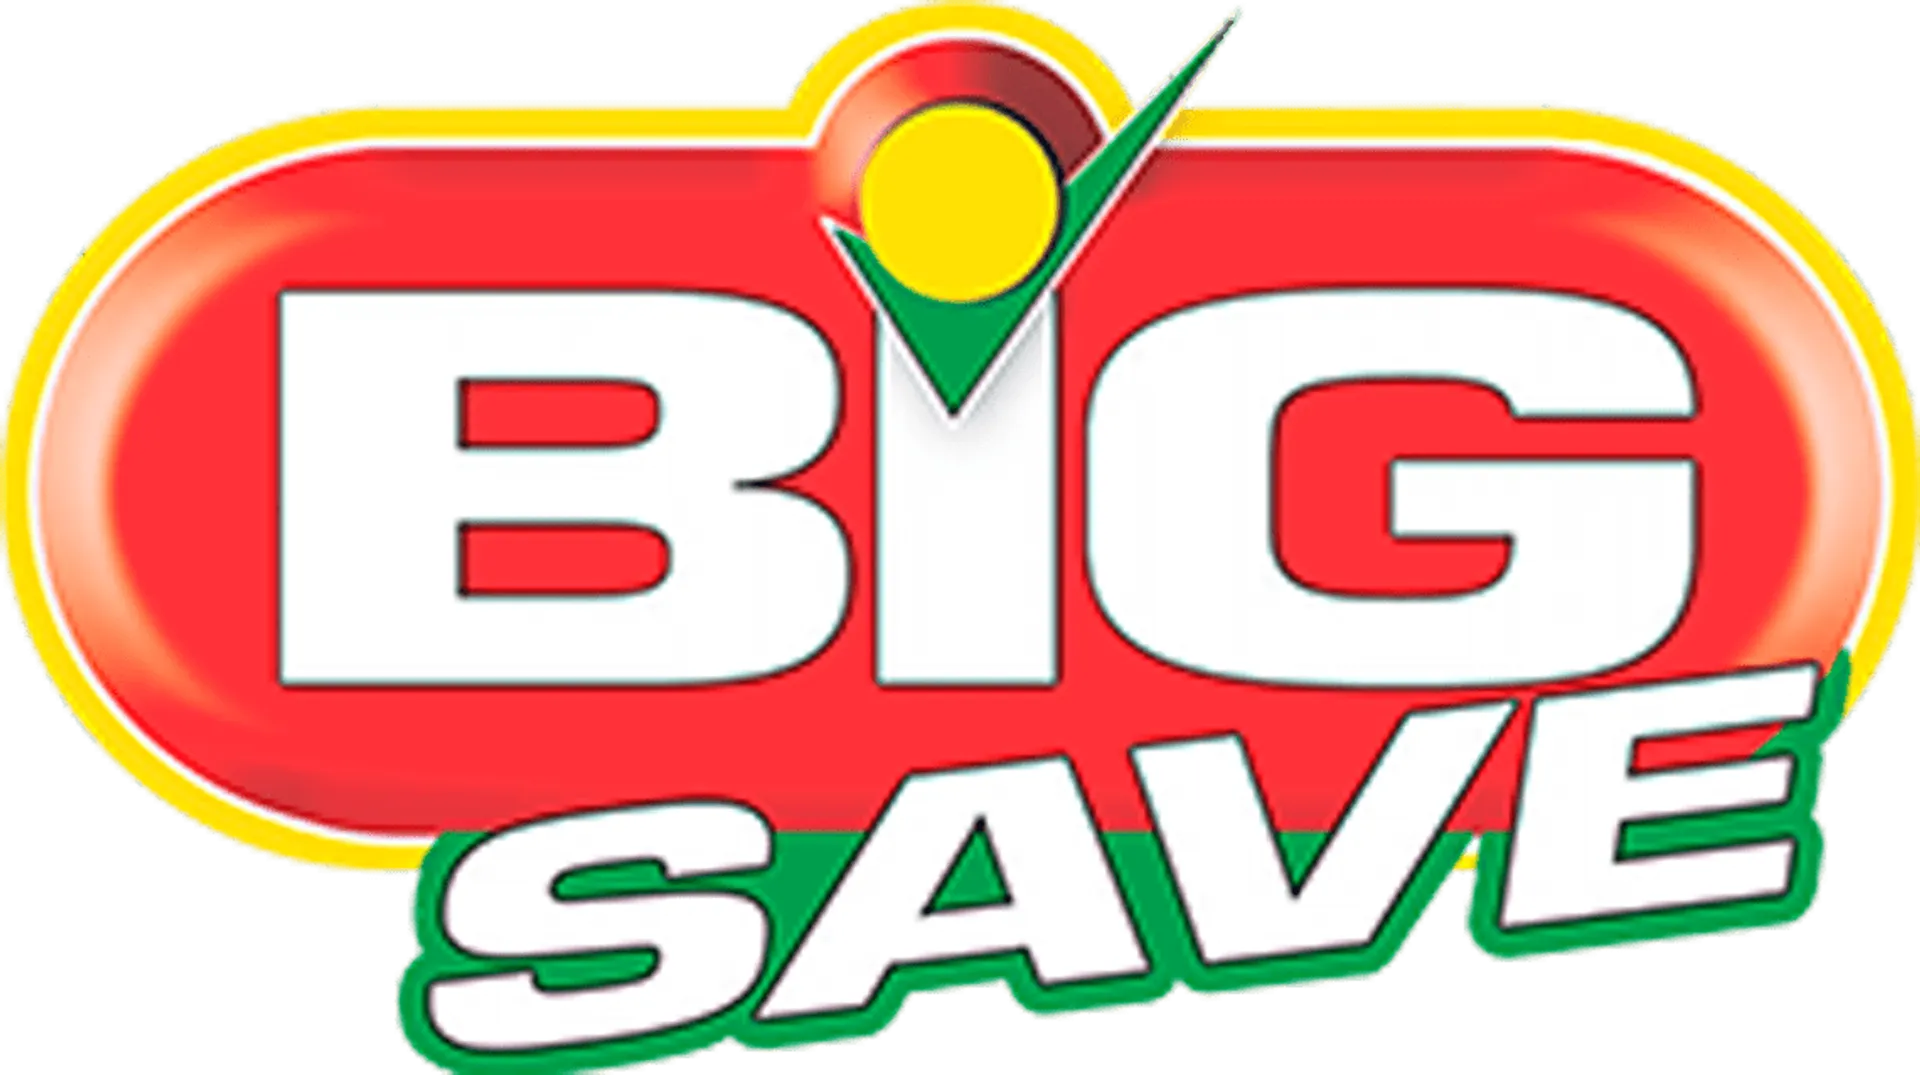 BIG SAVE logo